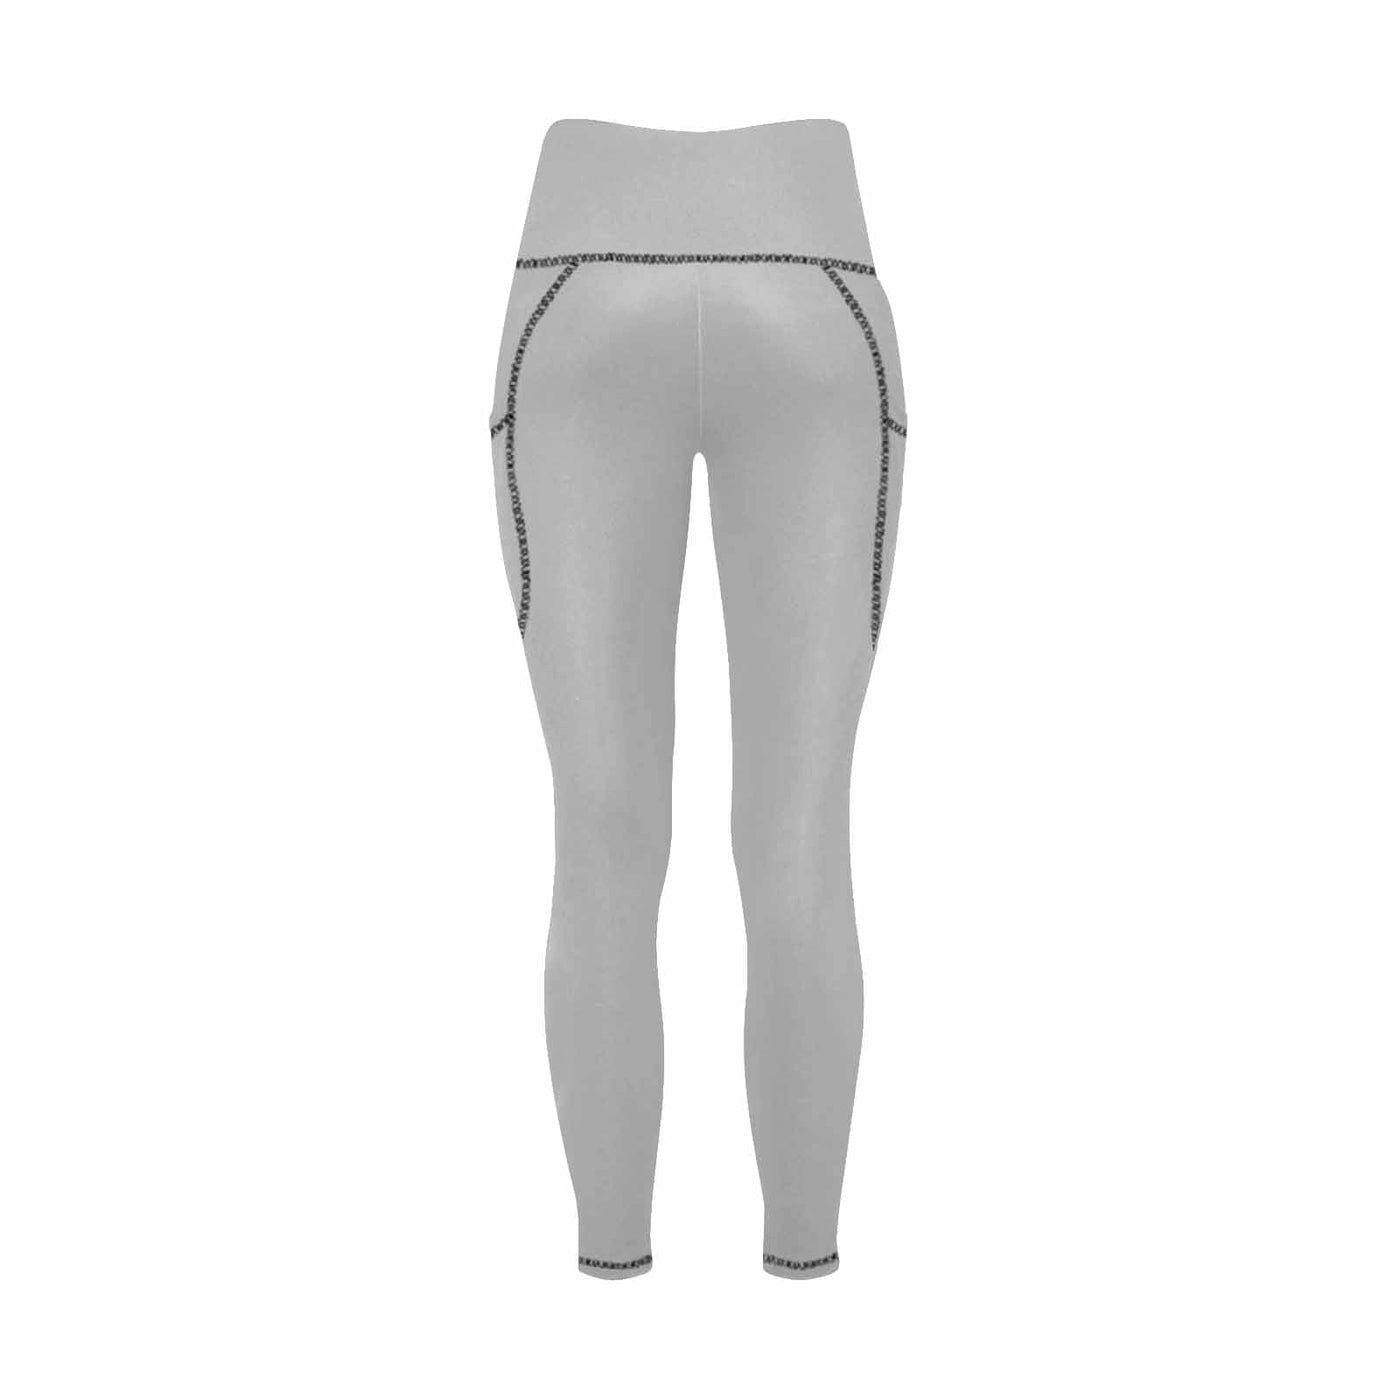 Womens High Waist Fitness Leggings With Pockets / Yoga Pants Light Grey